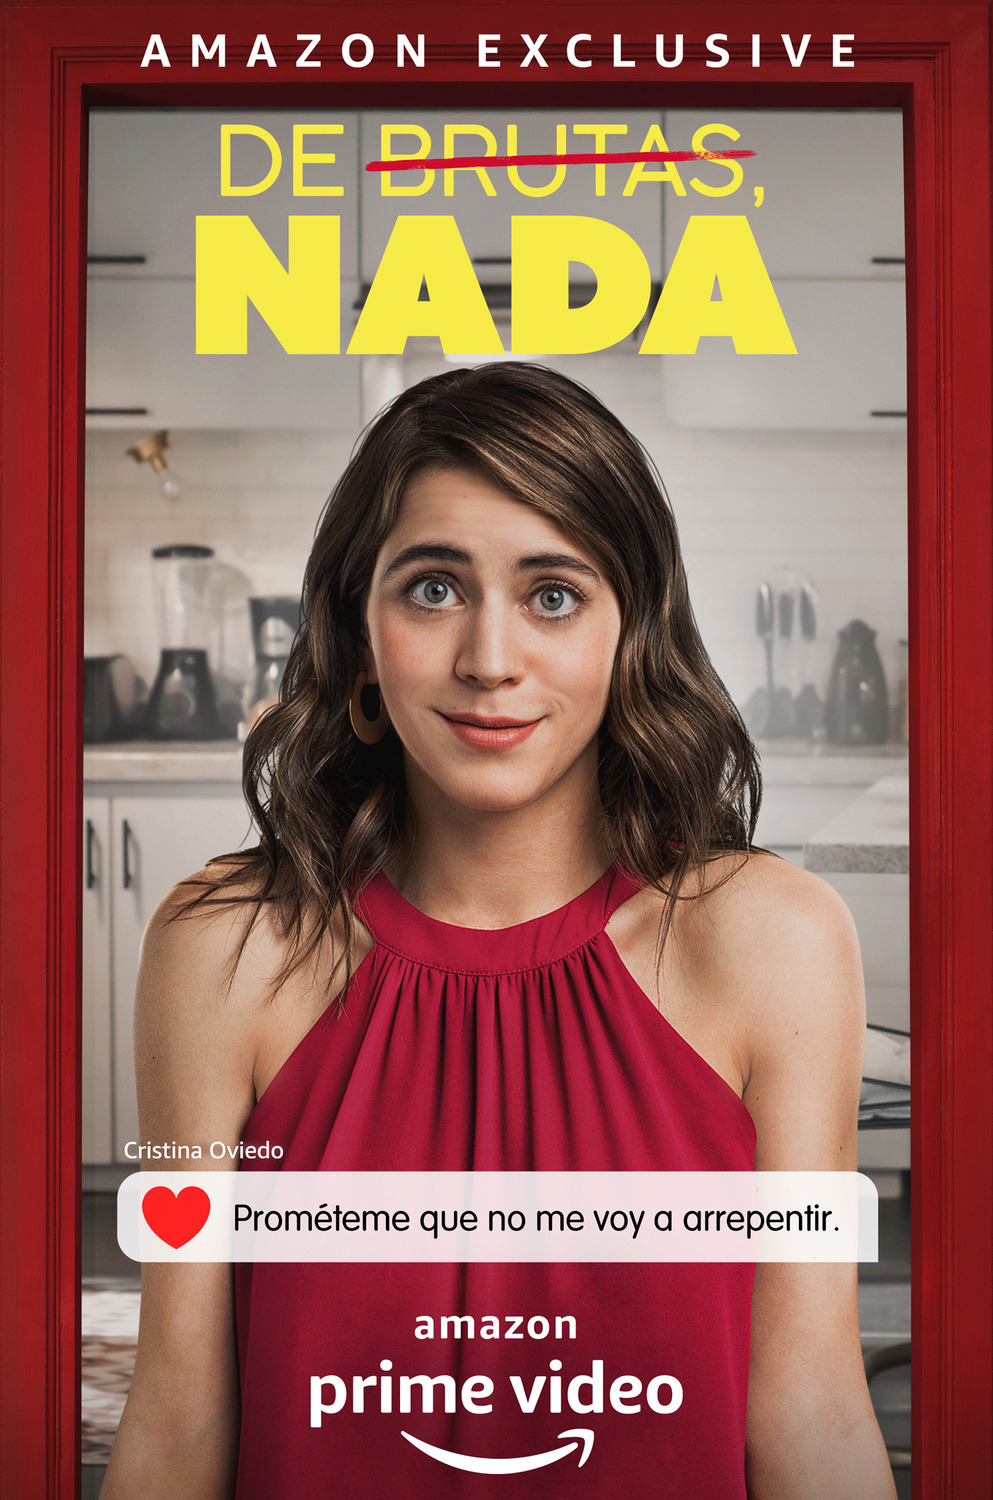 Extra Large TV Poster Image for De Brutas, Nada (#4 of 22)